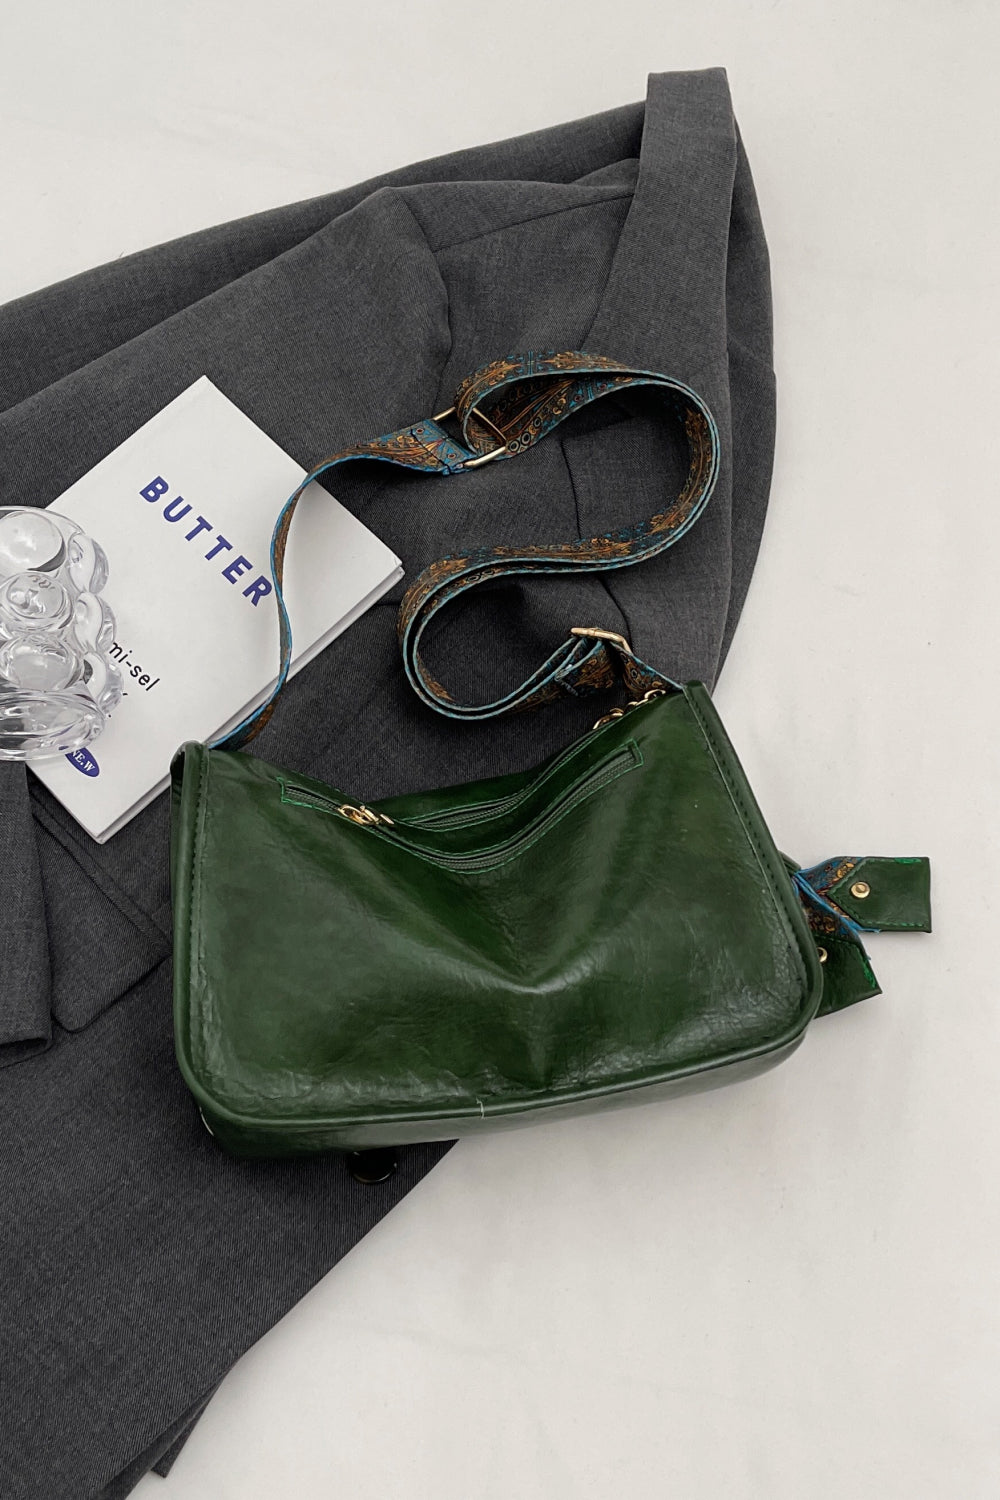 THE CAPRI | On sale | High Quality PU Leather